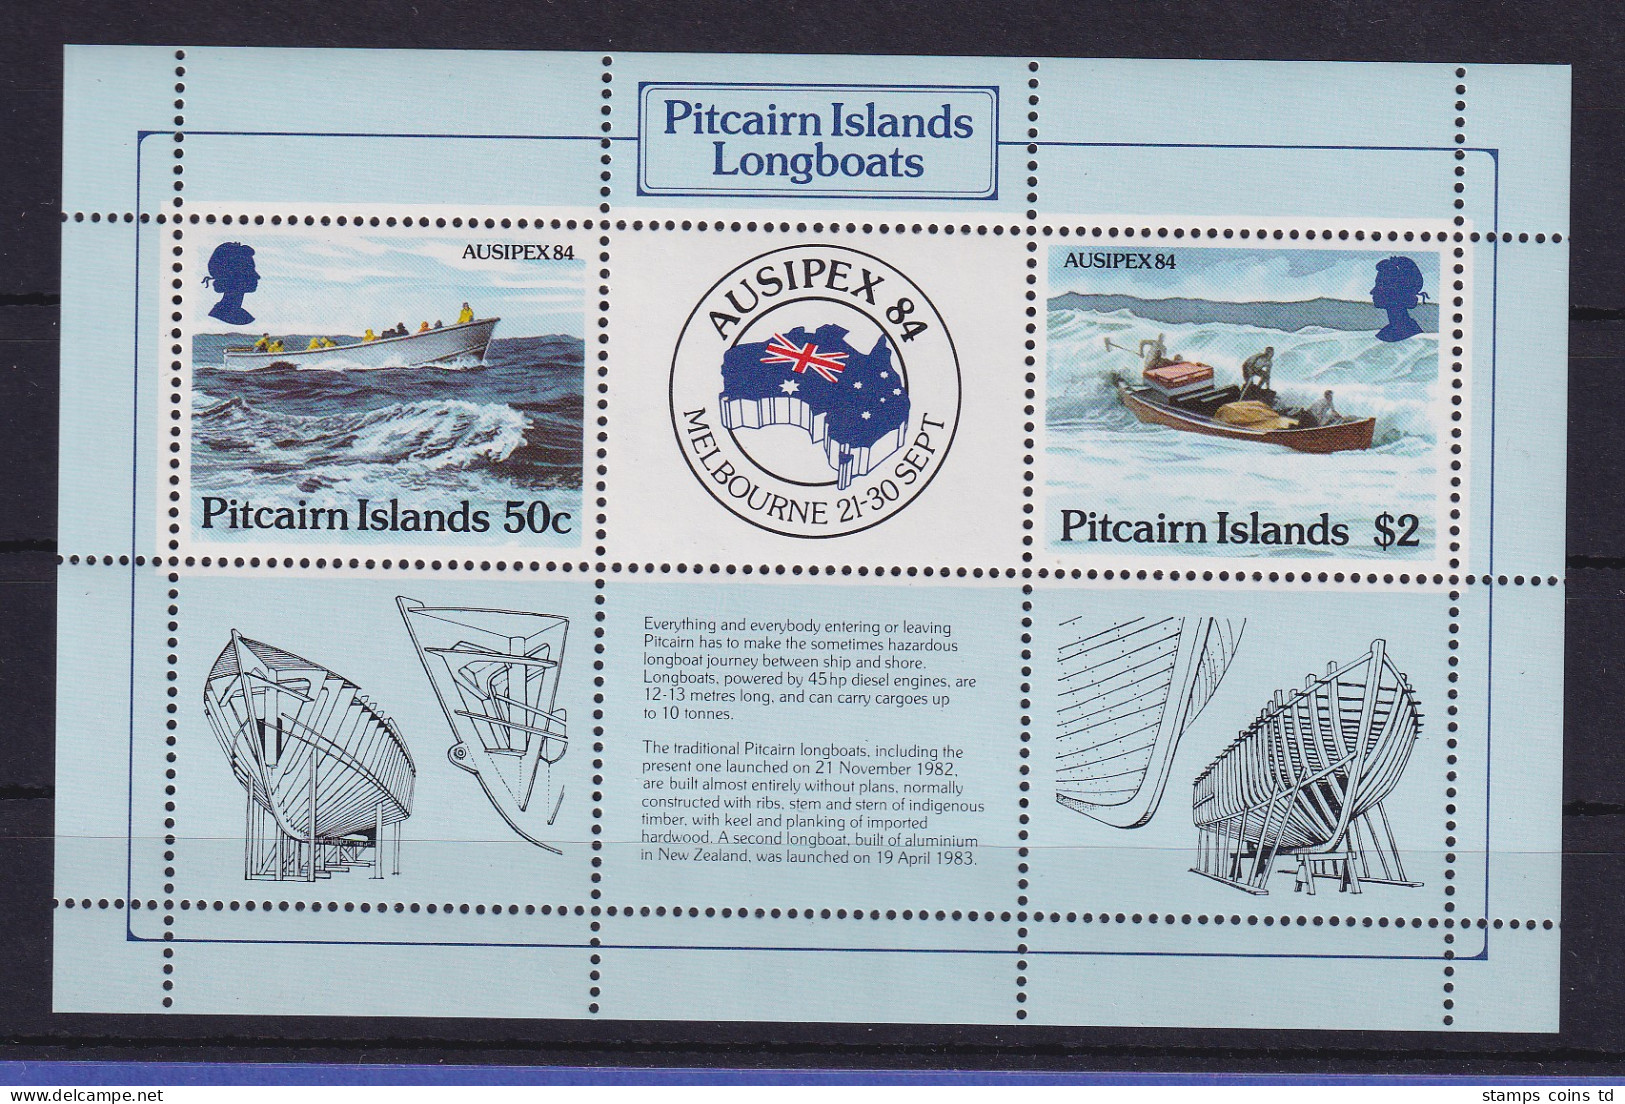 Pitcairn Islands 1984 Briefmarkenausstellung AUSIPEX 84 Mi.-Nr. Block 7 ** - Pitcairn Islands